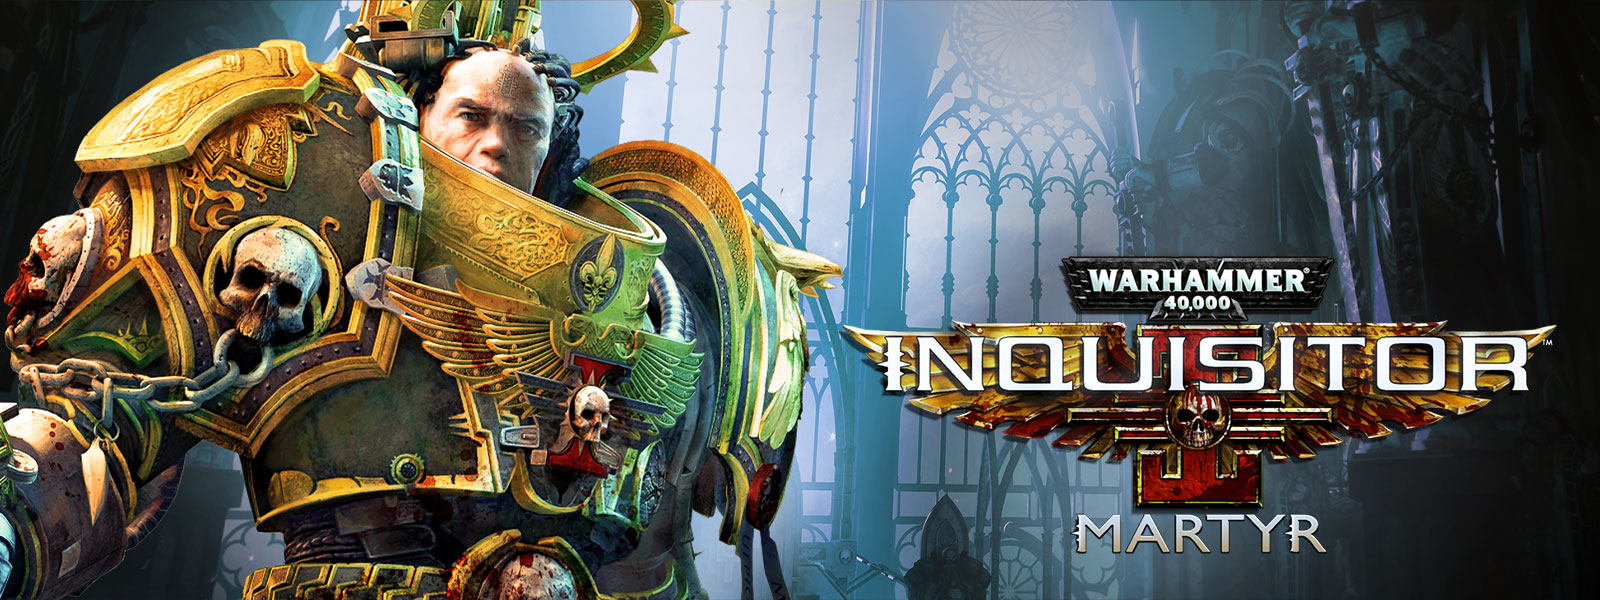 Warhammer 40,000: Inquisitor - Martyr, un Inquisiteur se tient dans une cathédrale extravagante.